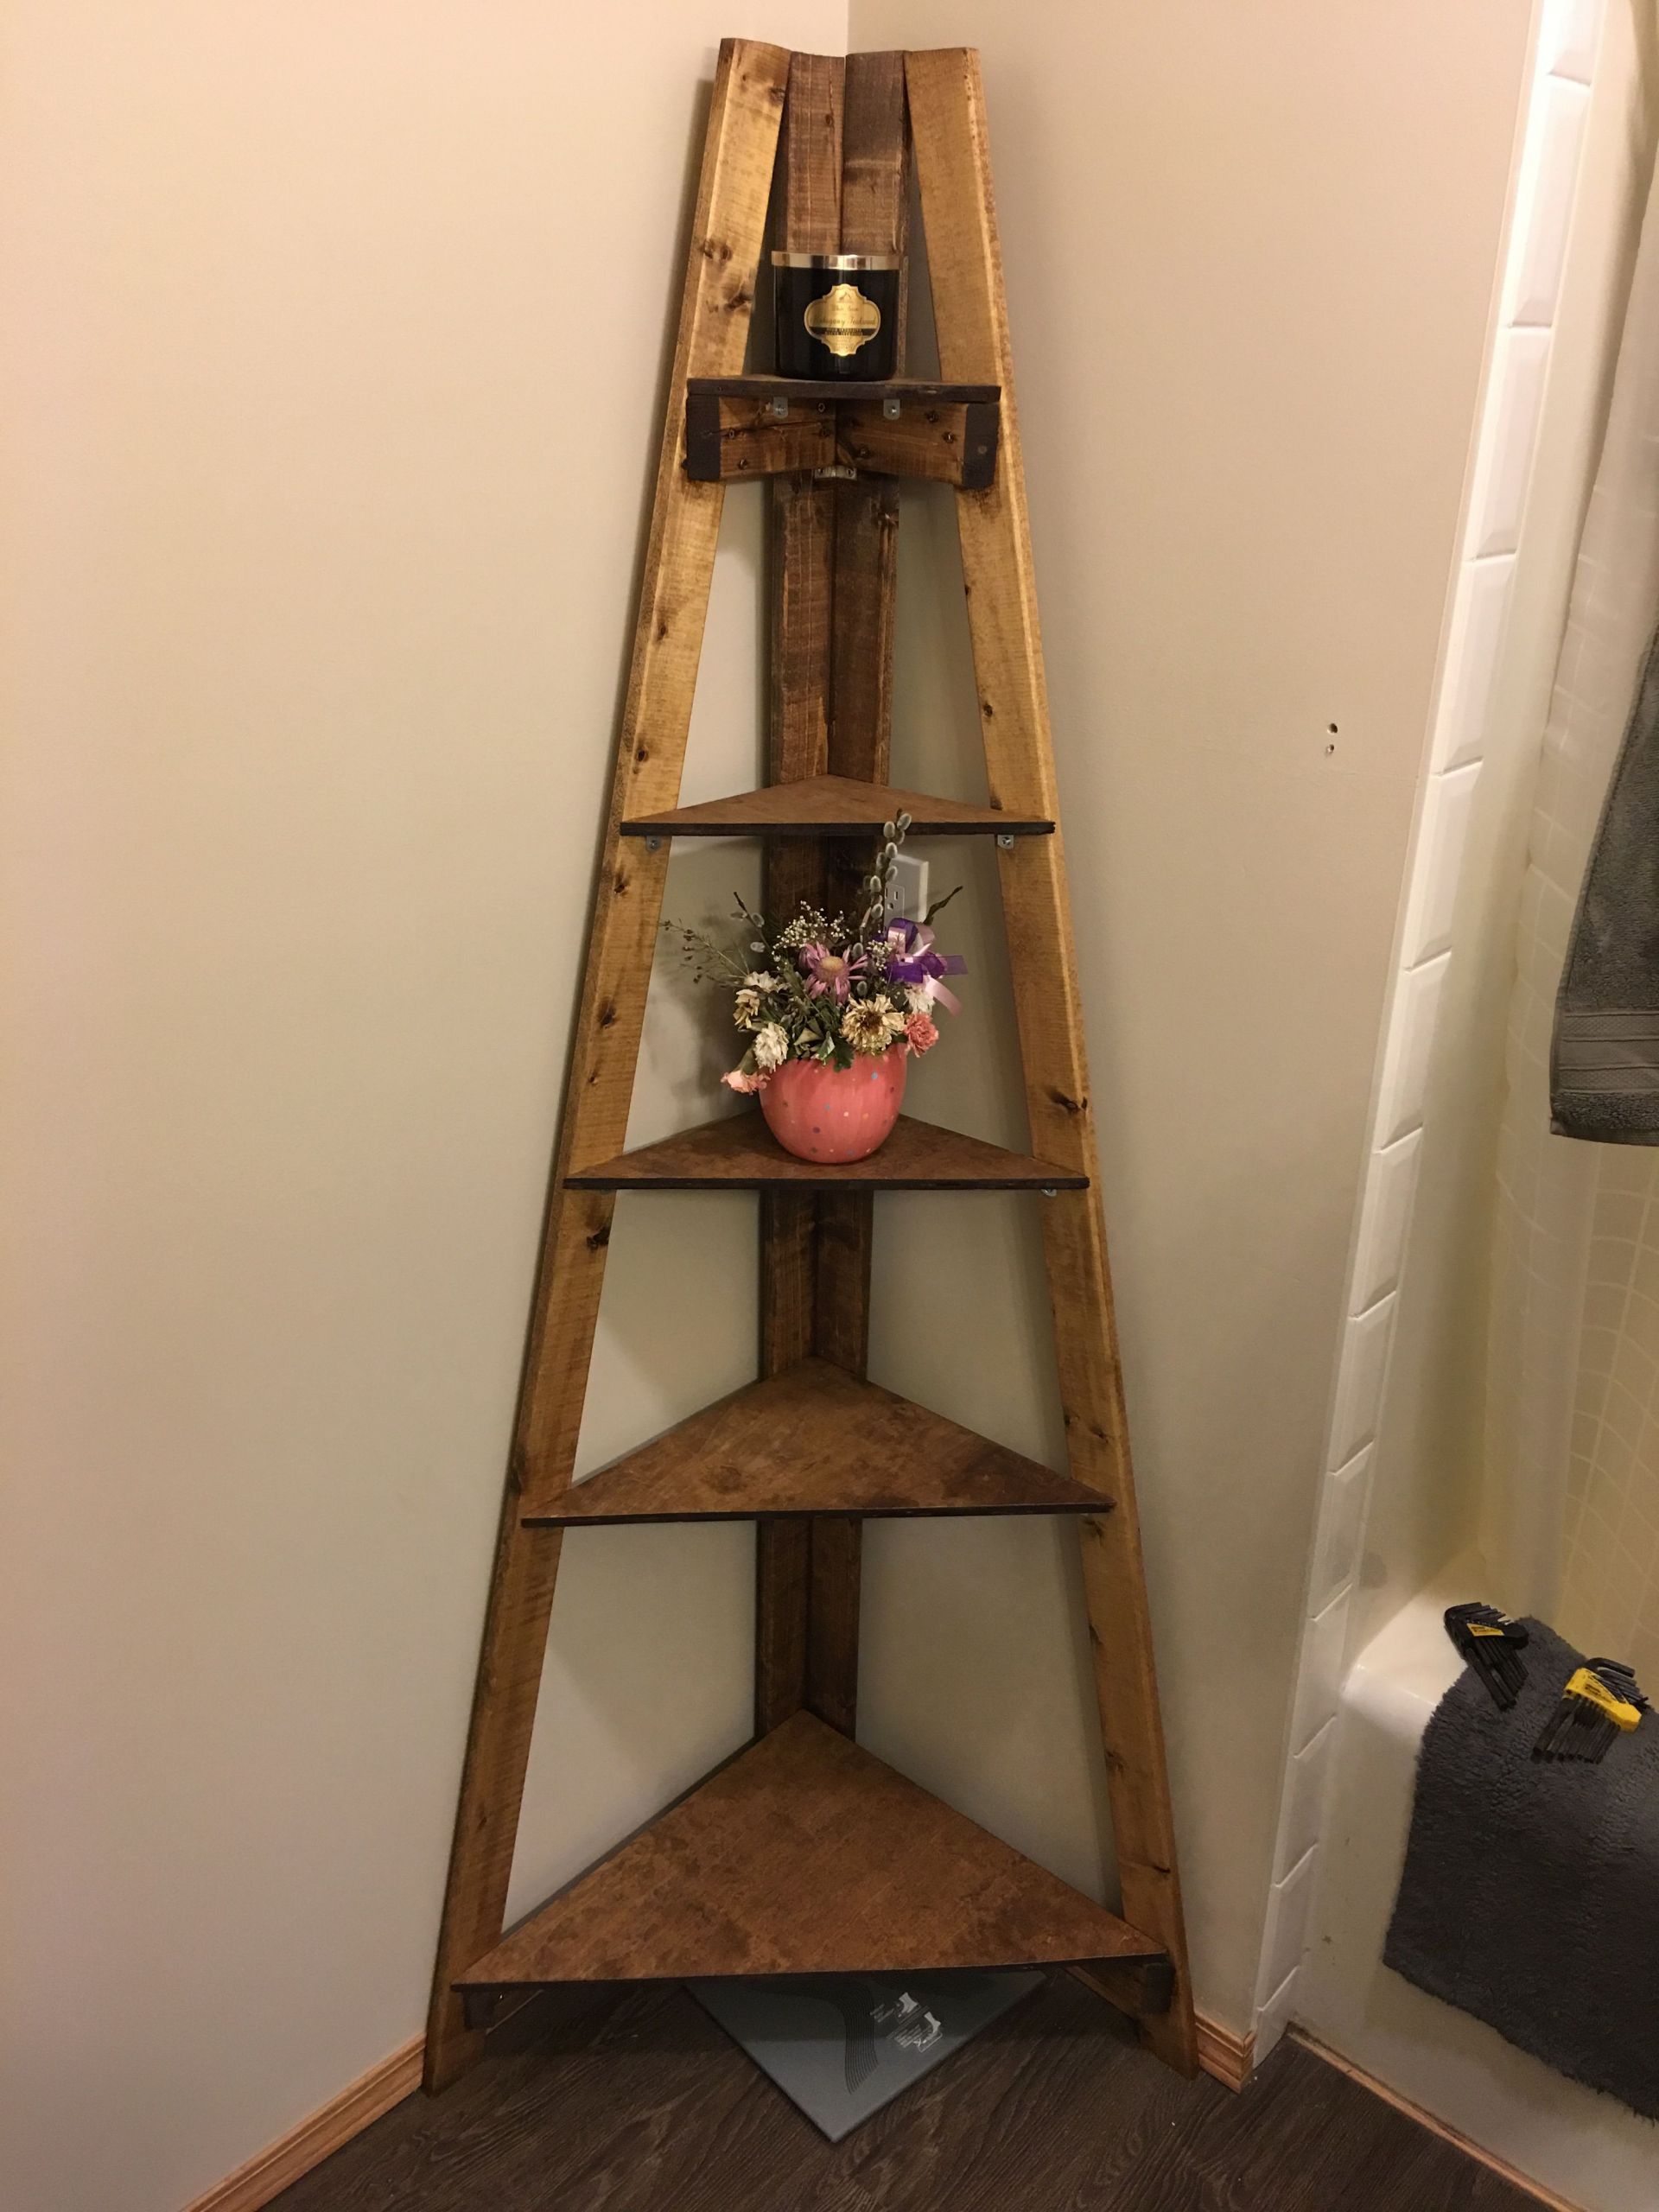 DIY Corner Shelf Plans
 DIY bathroom corner ladder shelf